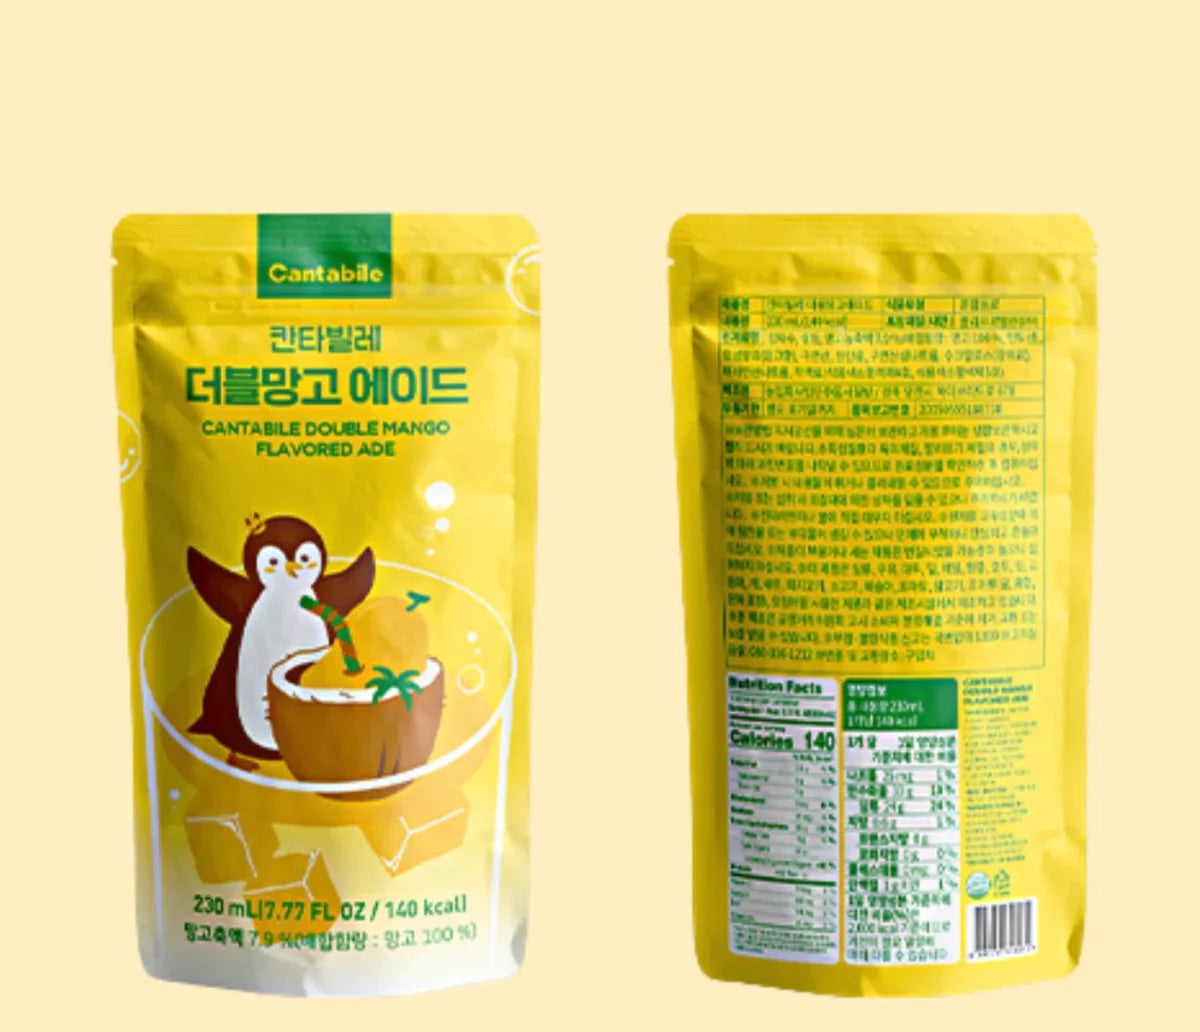 Cantabile Double Mango Flavored Ade - 230mL/7.77oz - 0